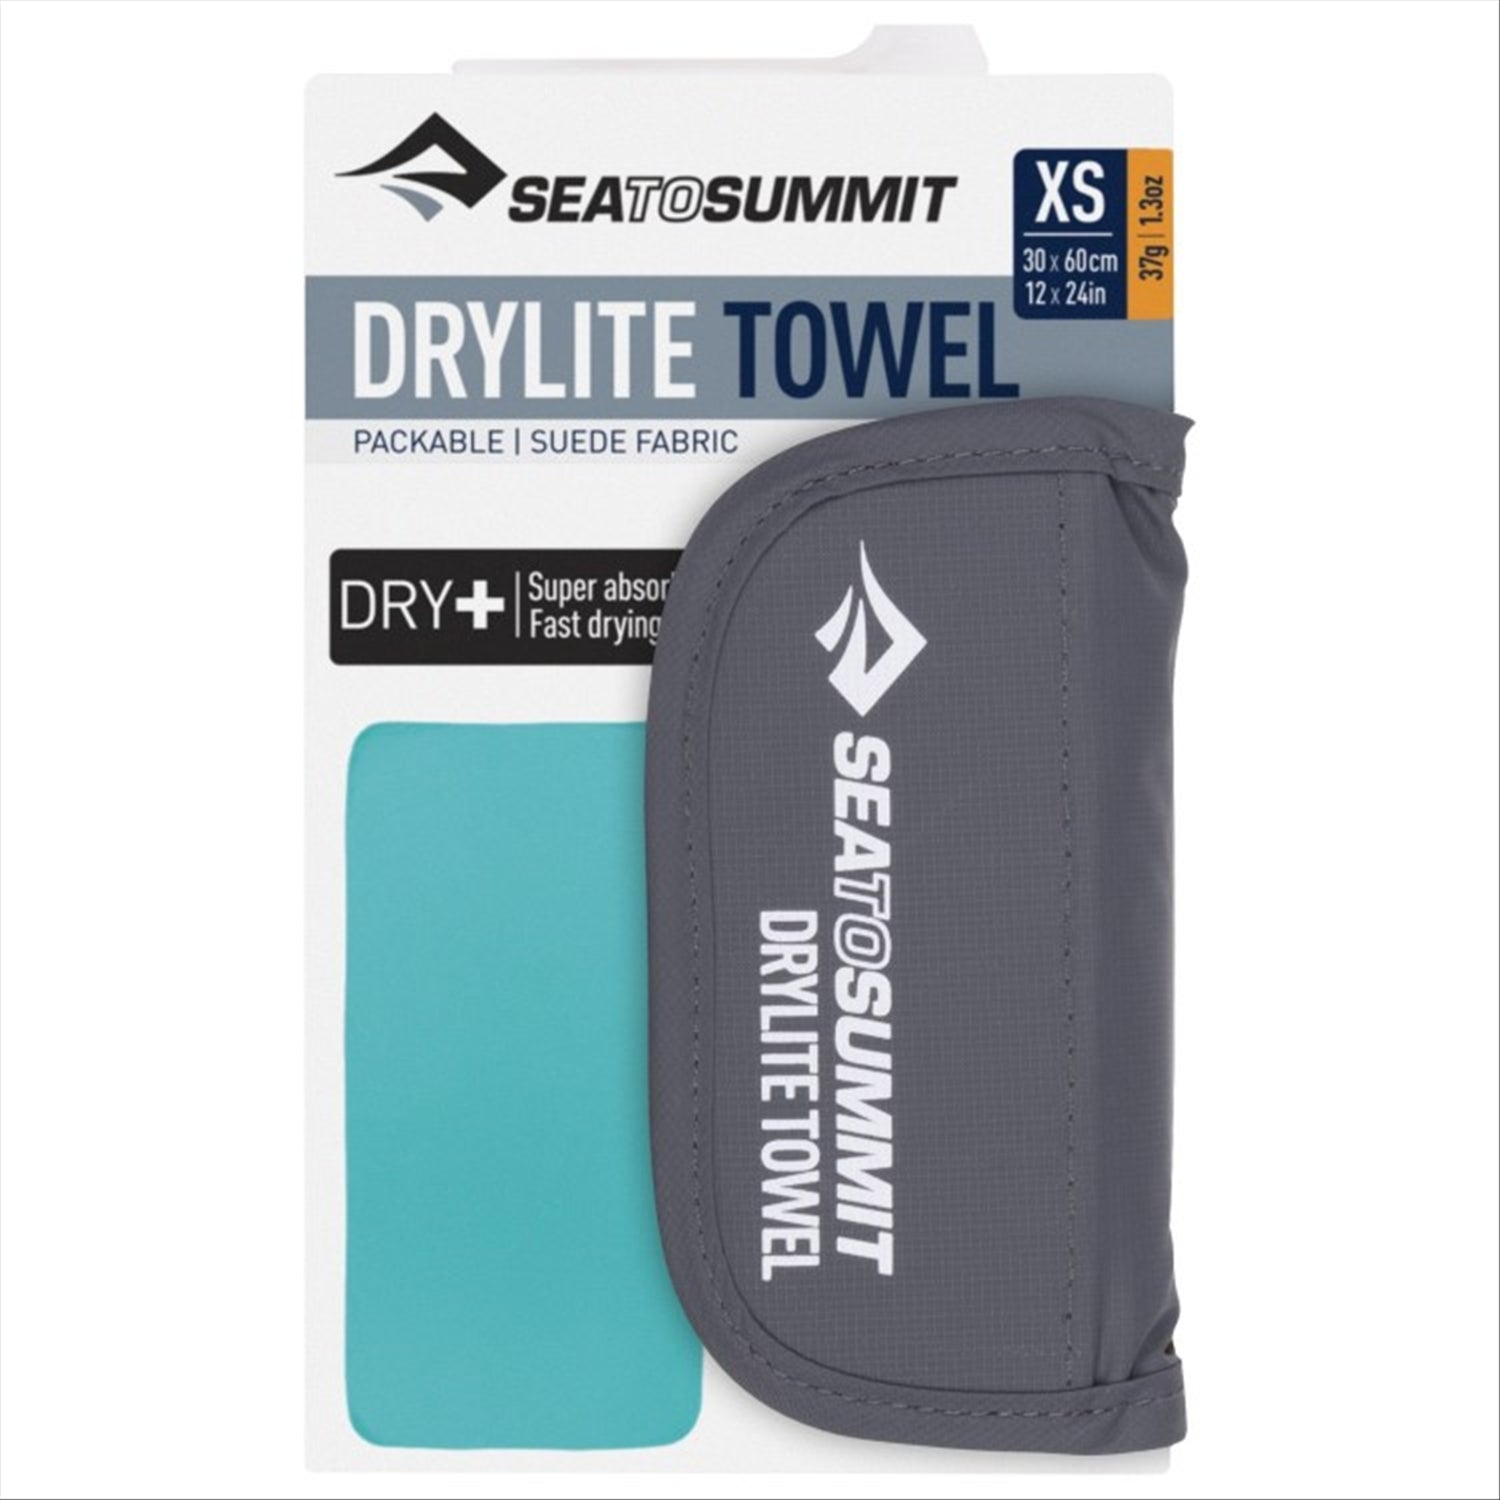 Sea to Summit Sea To Summit Drylite Towels